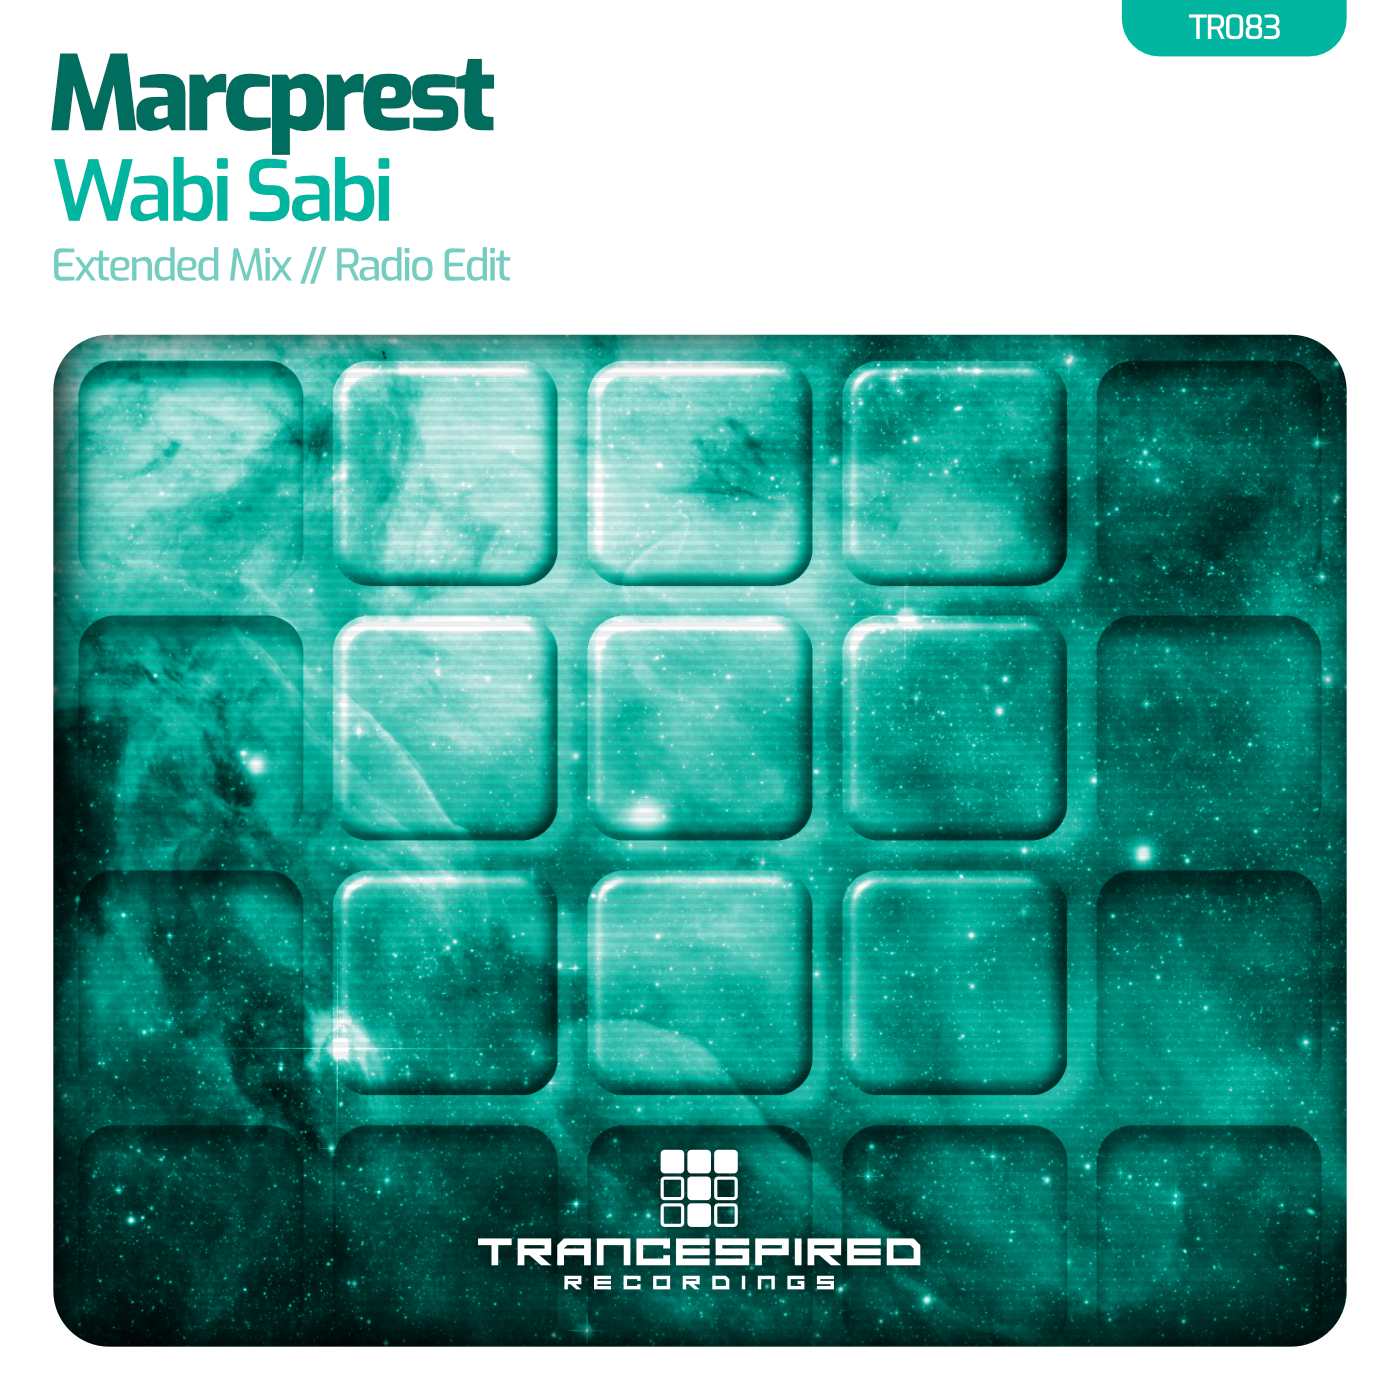 Marcprest presents Wabi Sabi on Trancespired Recordings